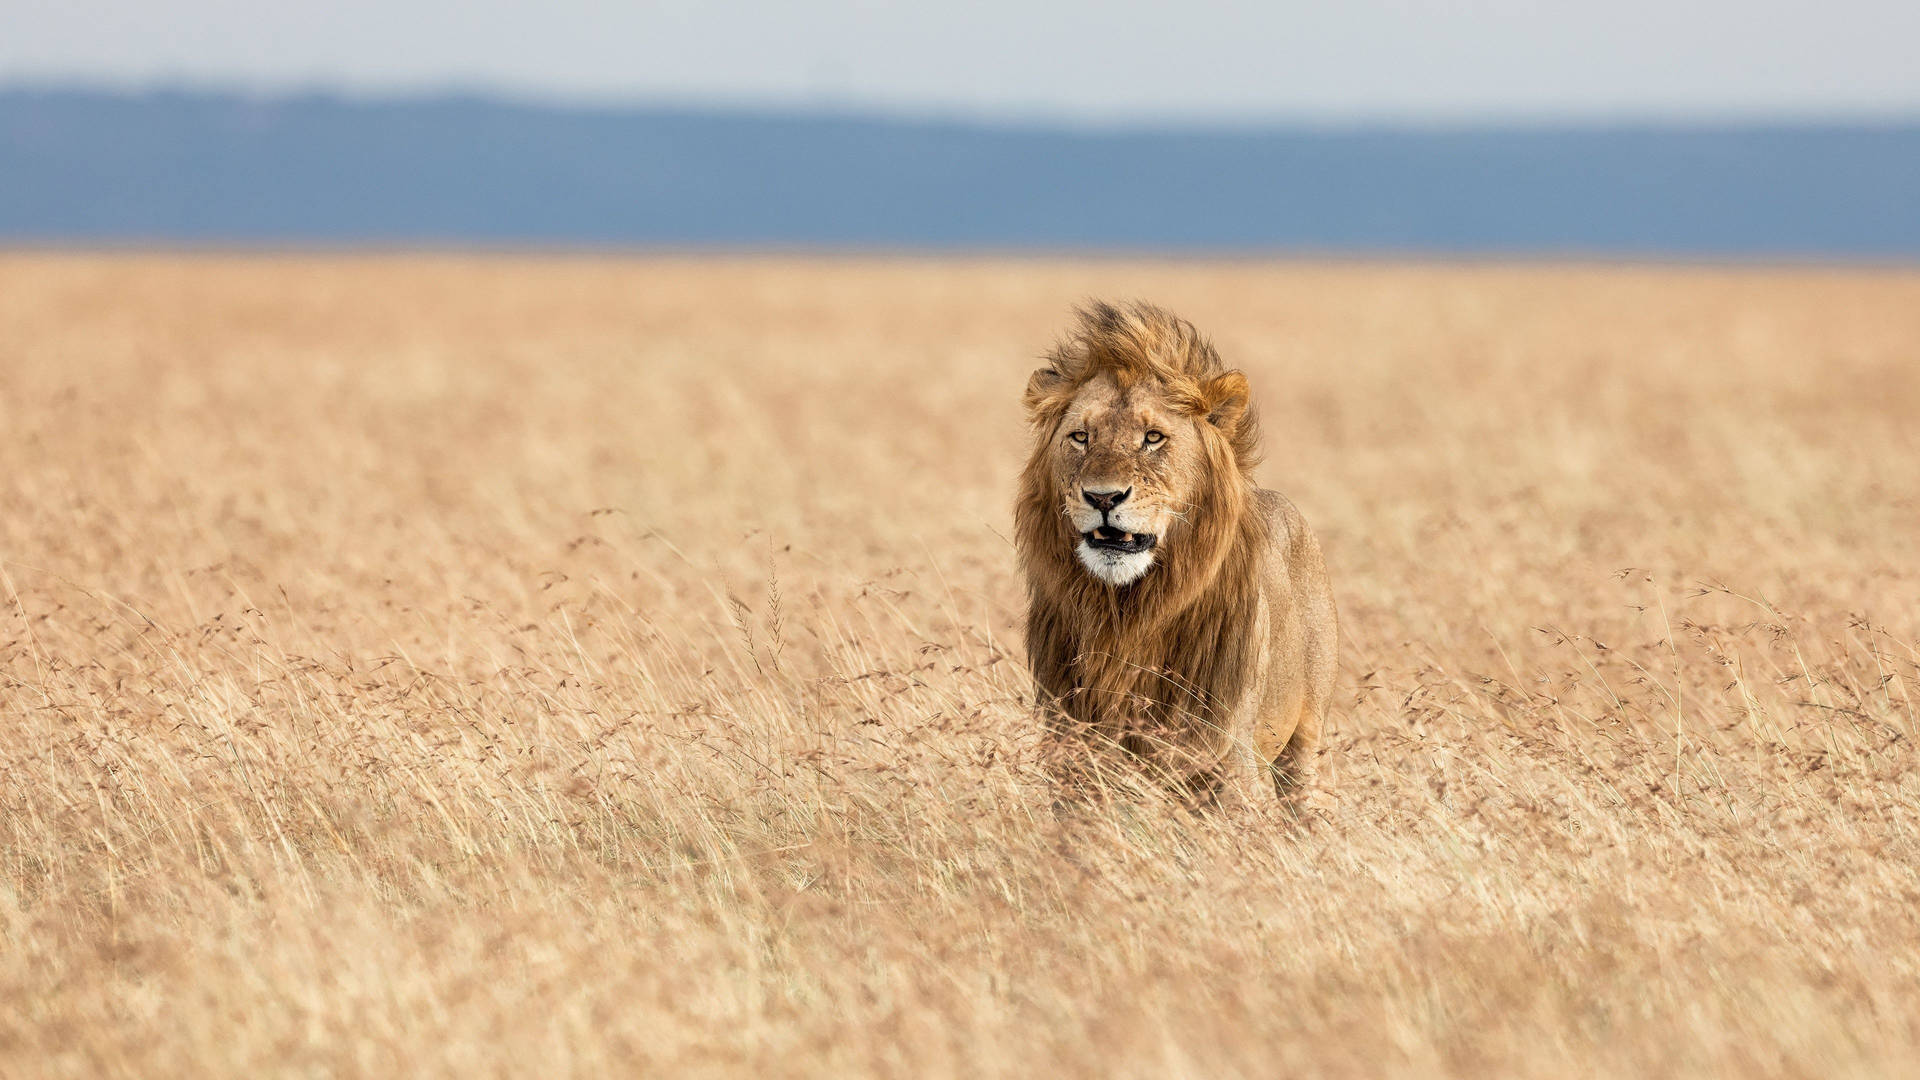 Lion In Africa Focus Shot